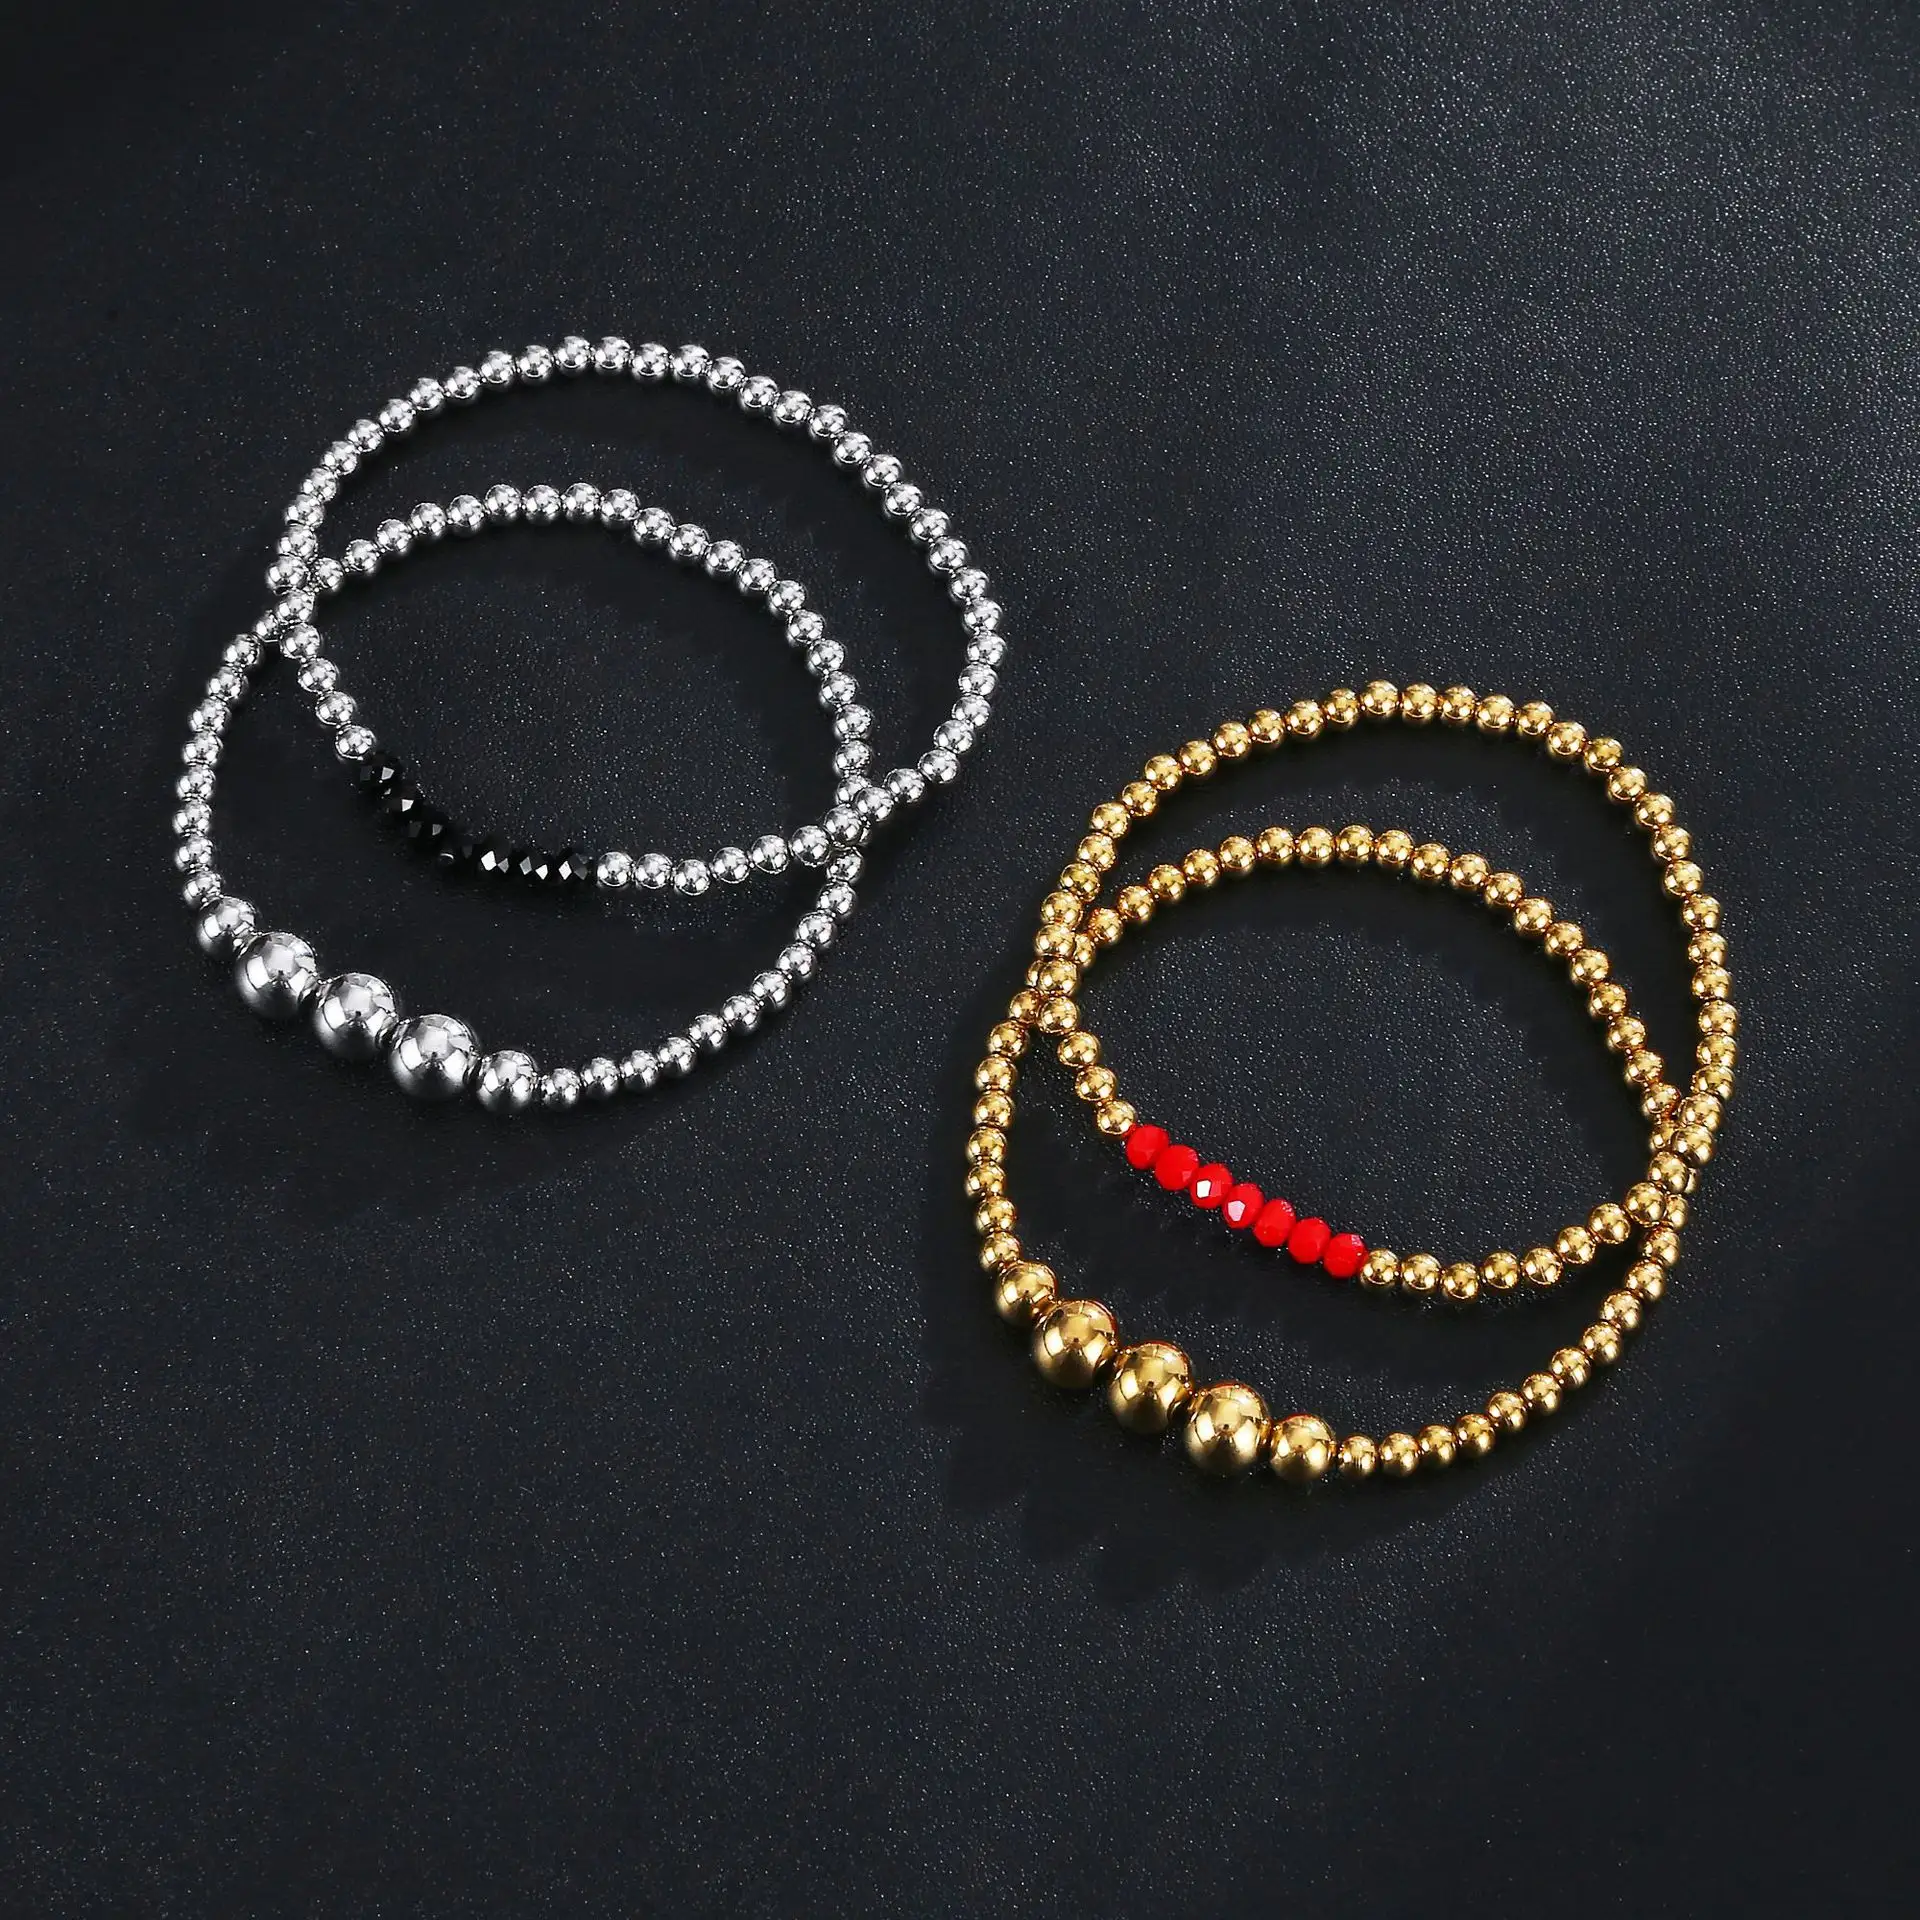 Beimai OEM bracelet 18k gold Stainless steel beads waterproof and non-fading crystal hand-beaded elastic bracelet